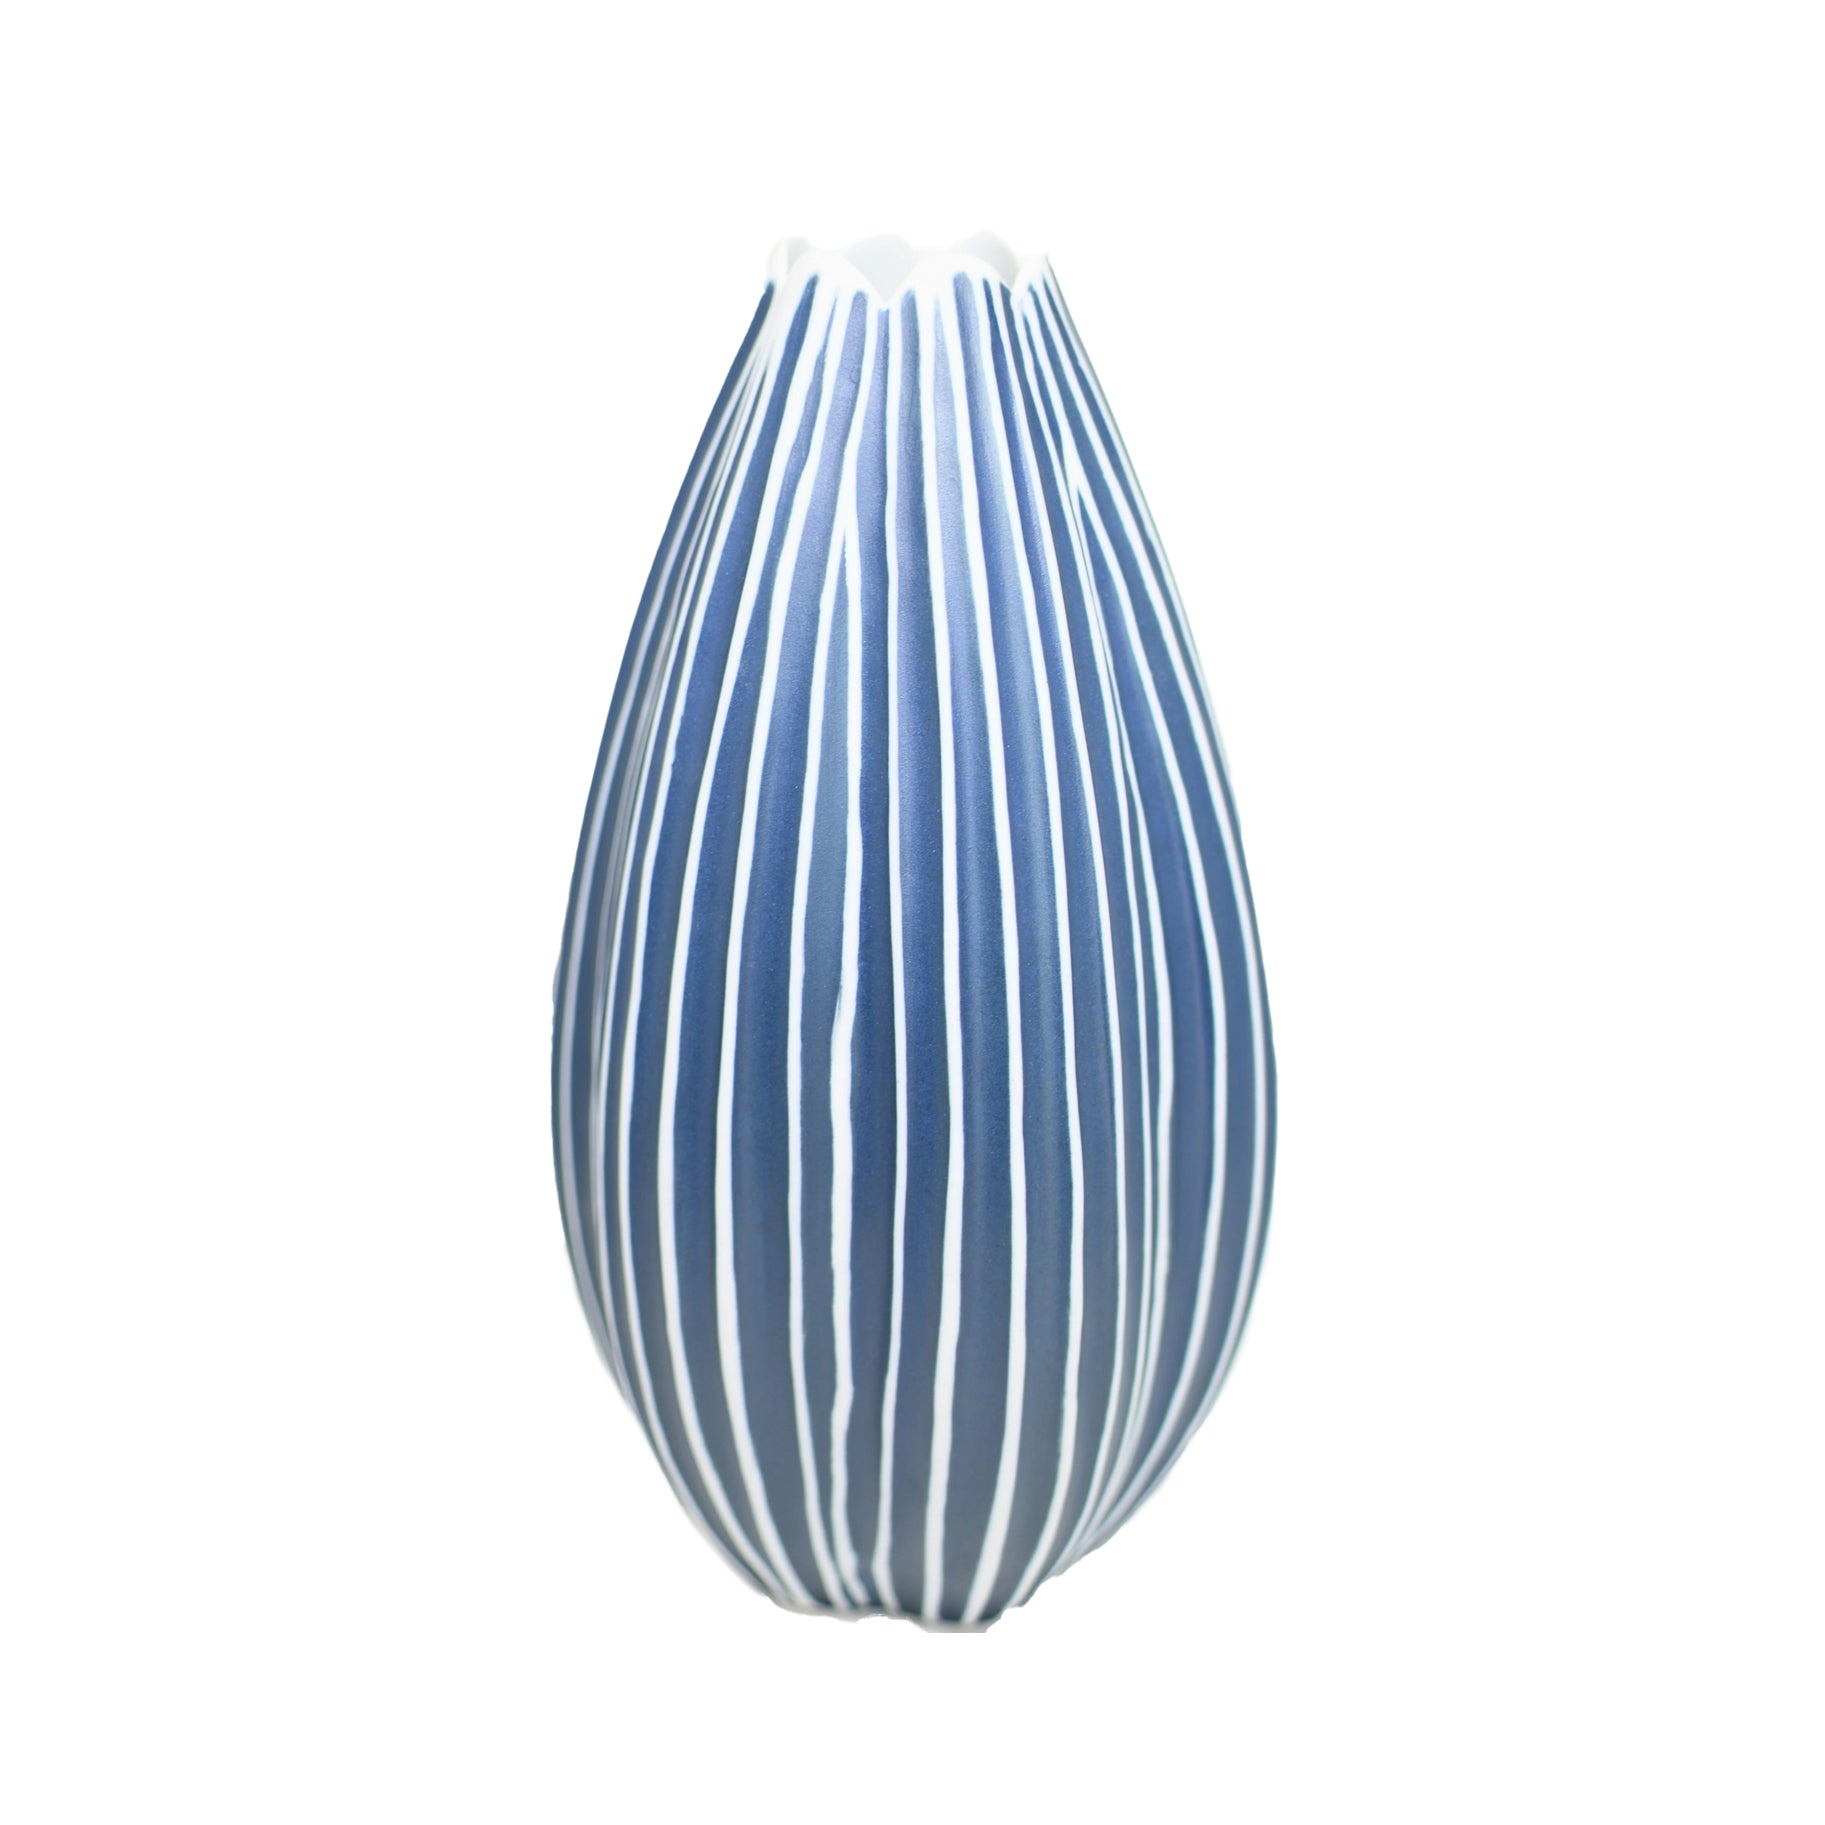 Tulip Porcelain Vases